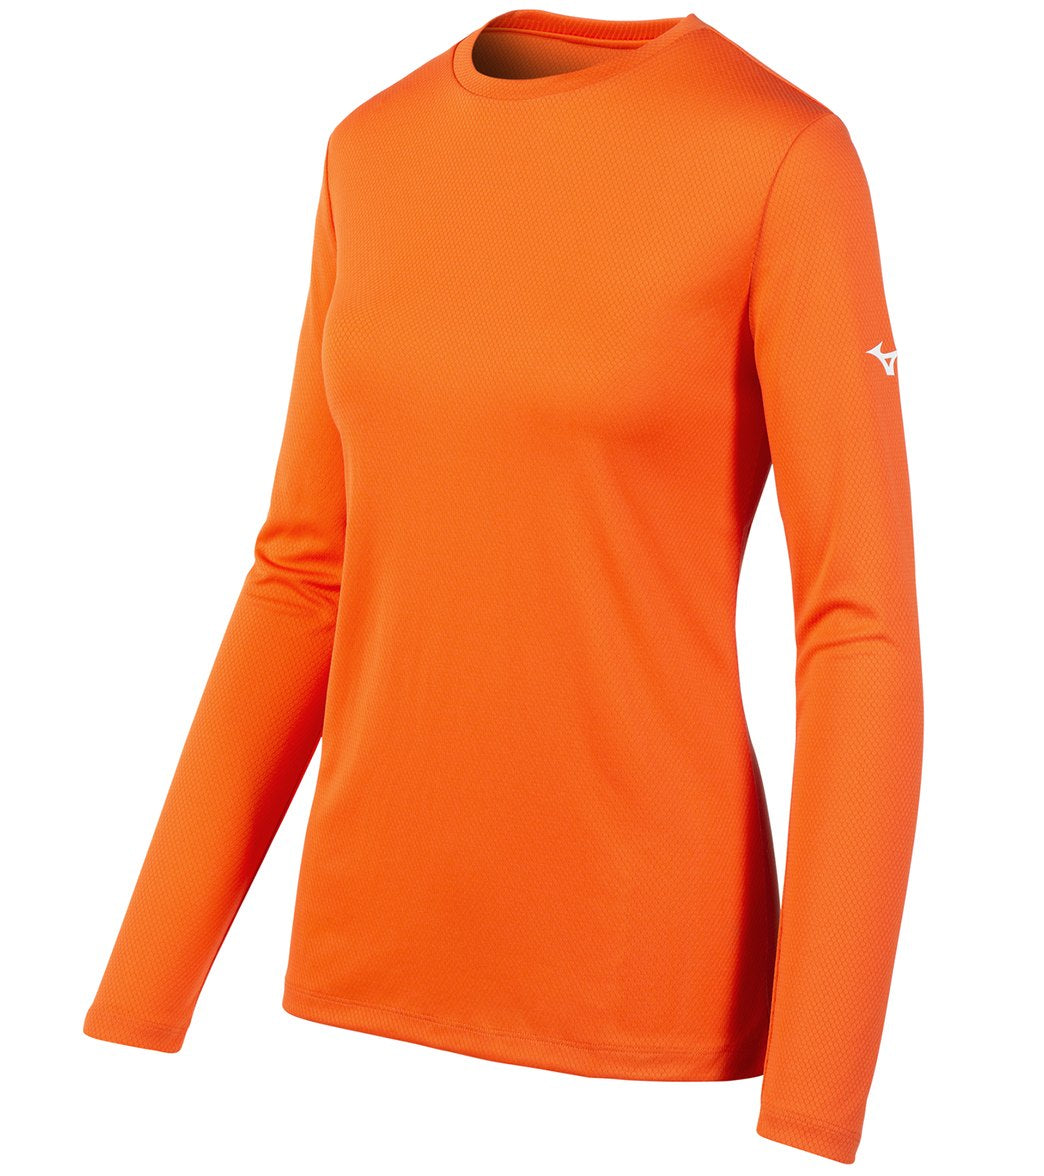 Mizuno Women's Long Sleeve Tee Shirt - Orange Large Polyester - Swimoutlet.com